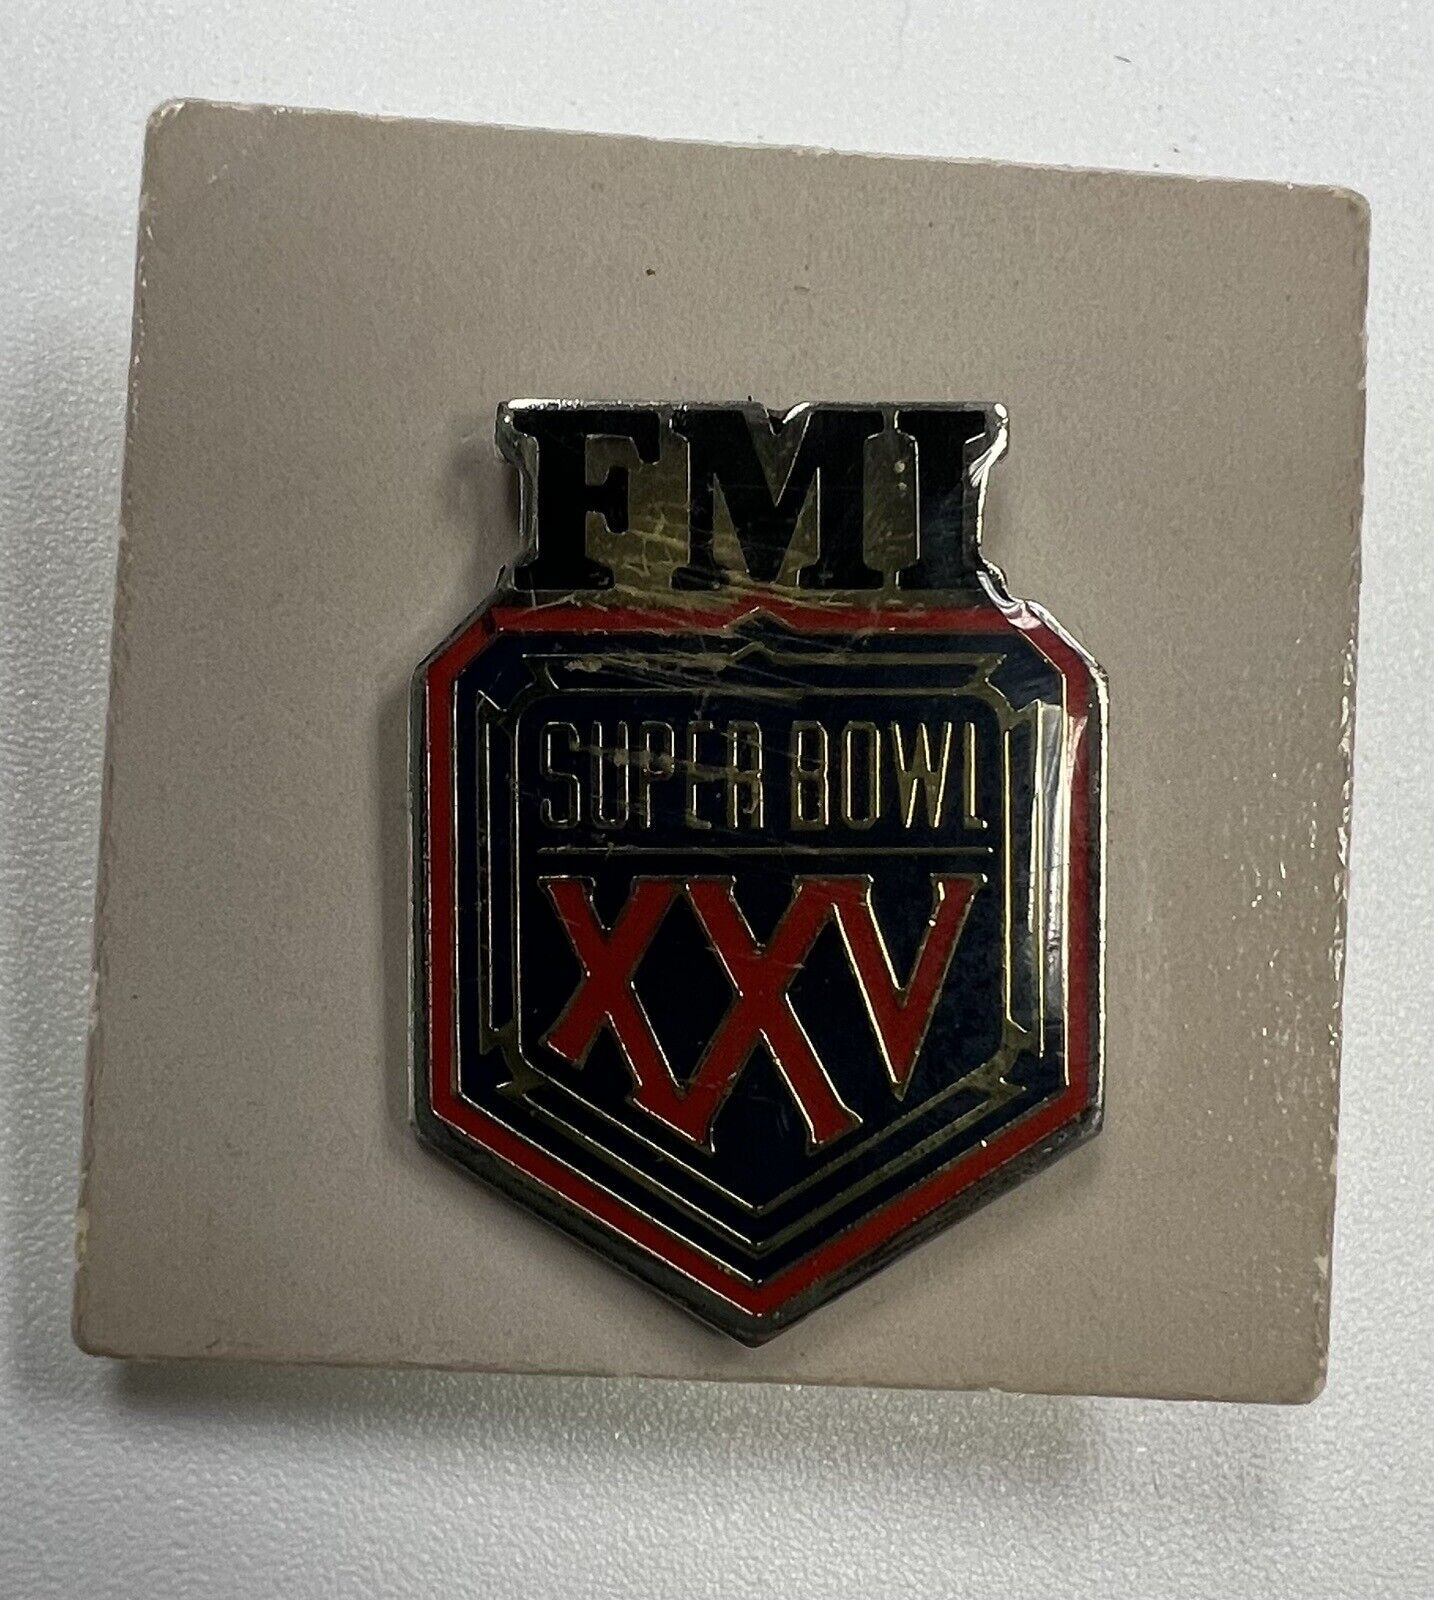 Vtg Super Bowl XXV FMI Sponsored NFL Football Lapel Pin by Peter David